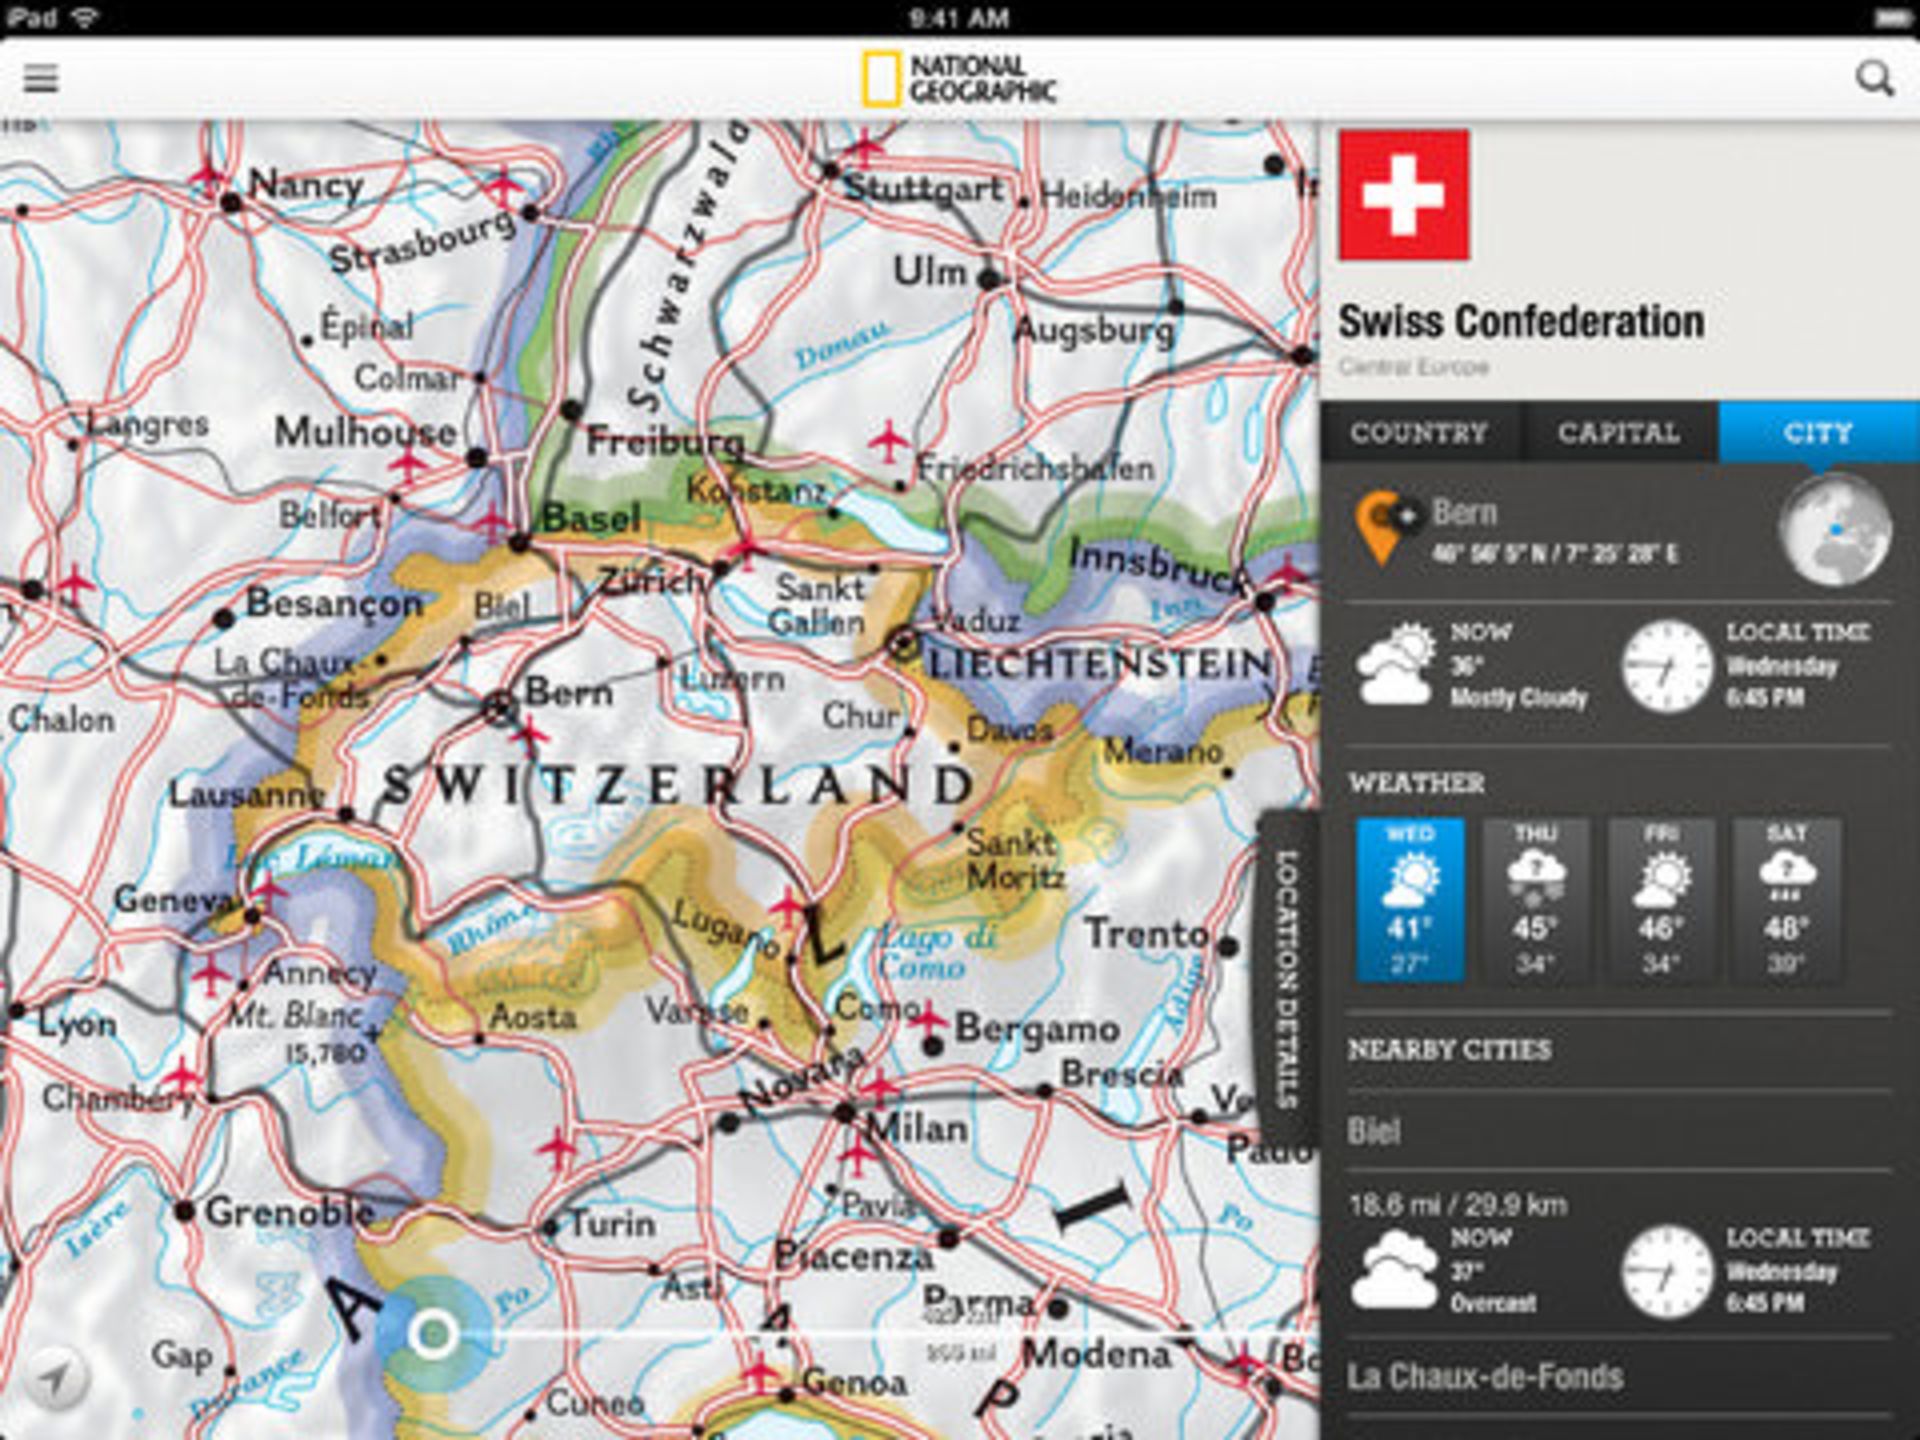 National-Geographic-World-Atlas-3.0.1-for-iOS-iPad-screenshot-001